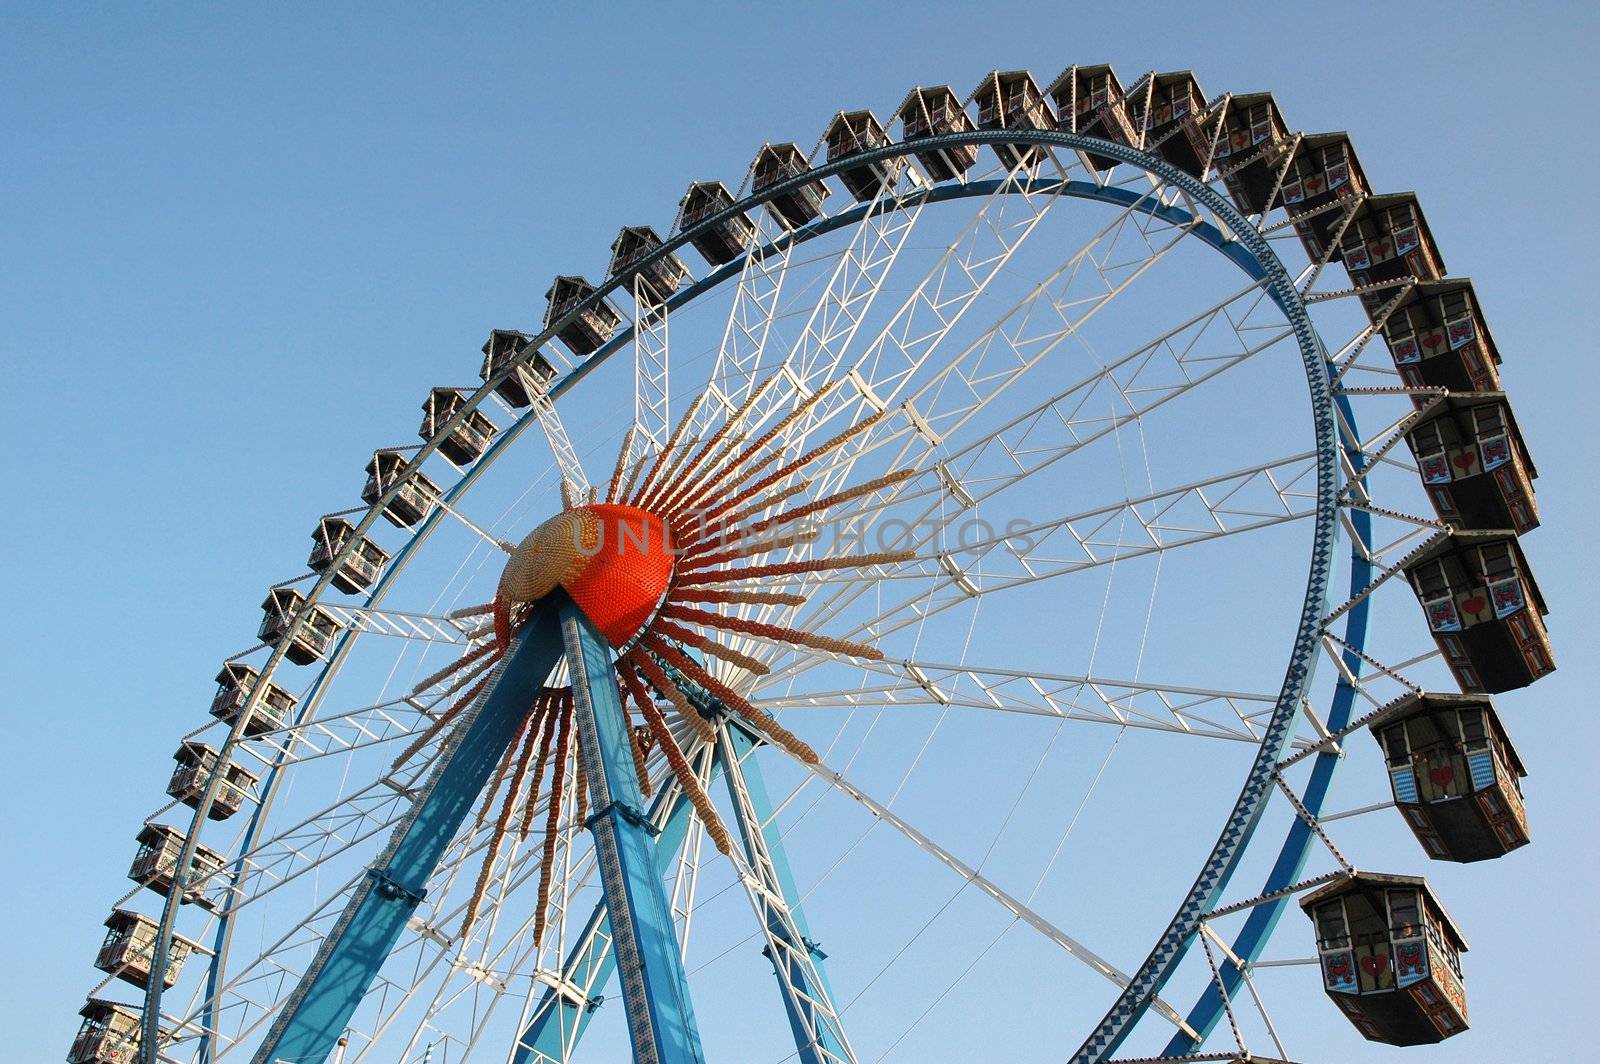 Ferris wheel against bright blue sky on amusement park